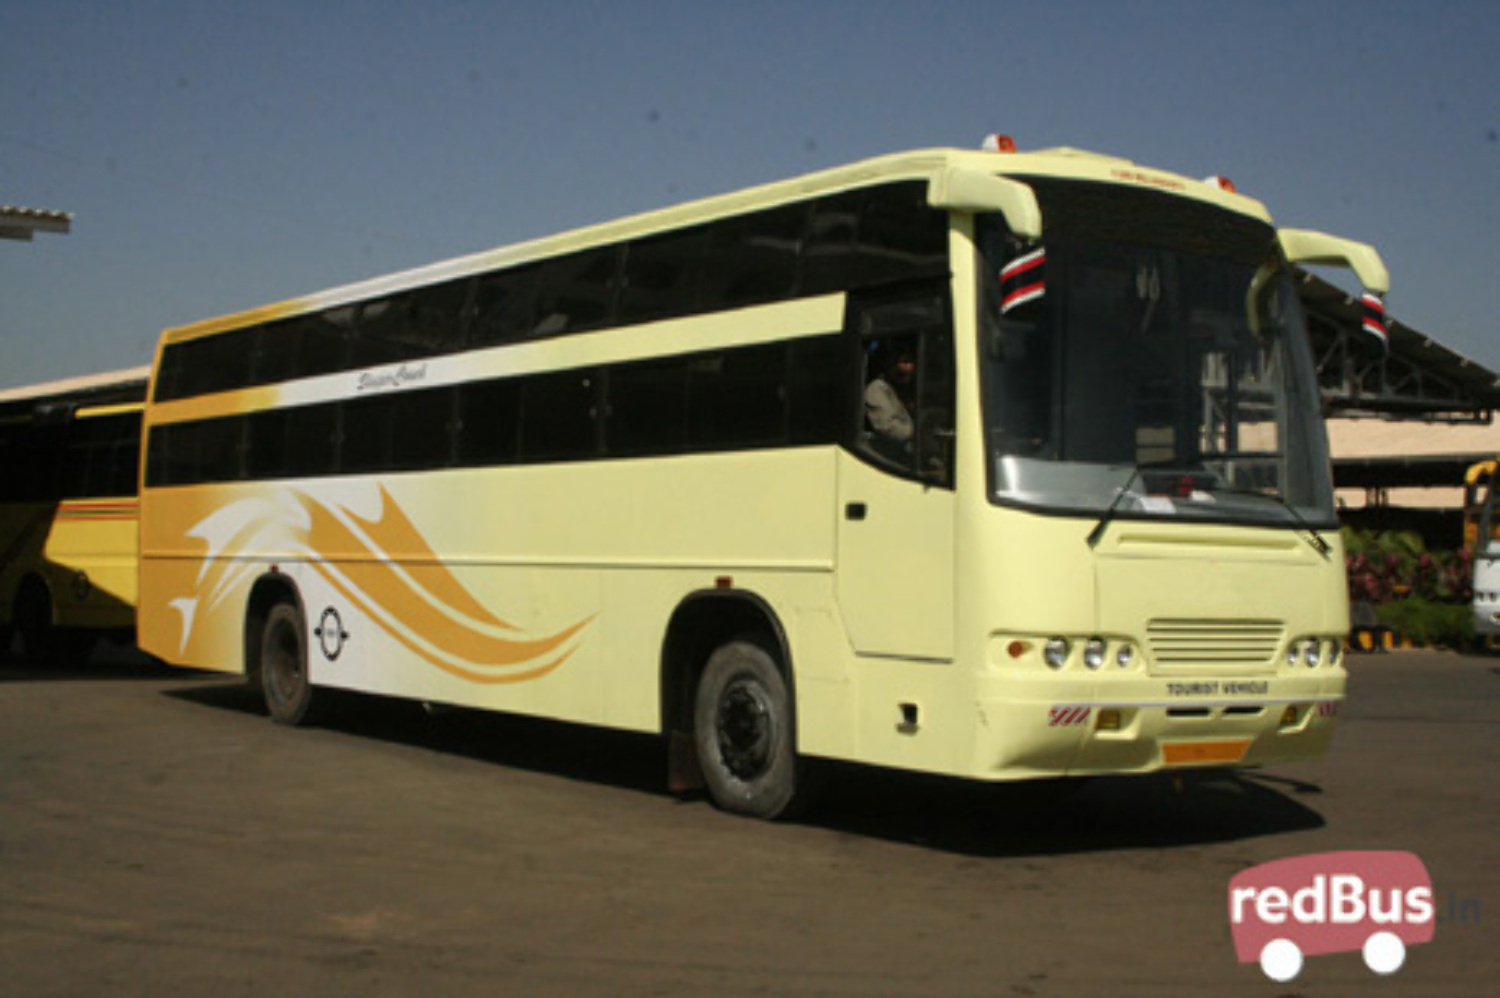 volvo bus services from delhi to jalandhar